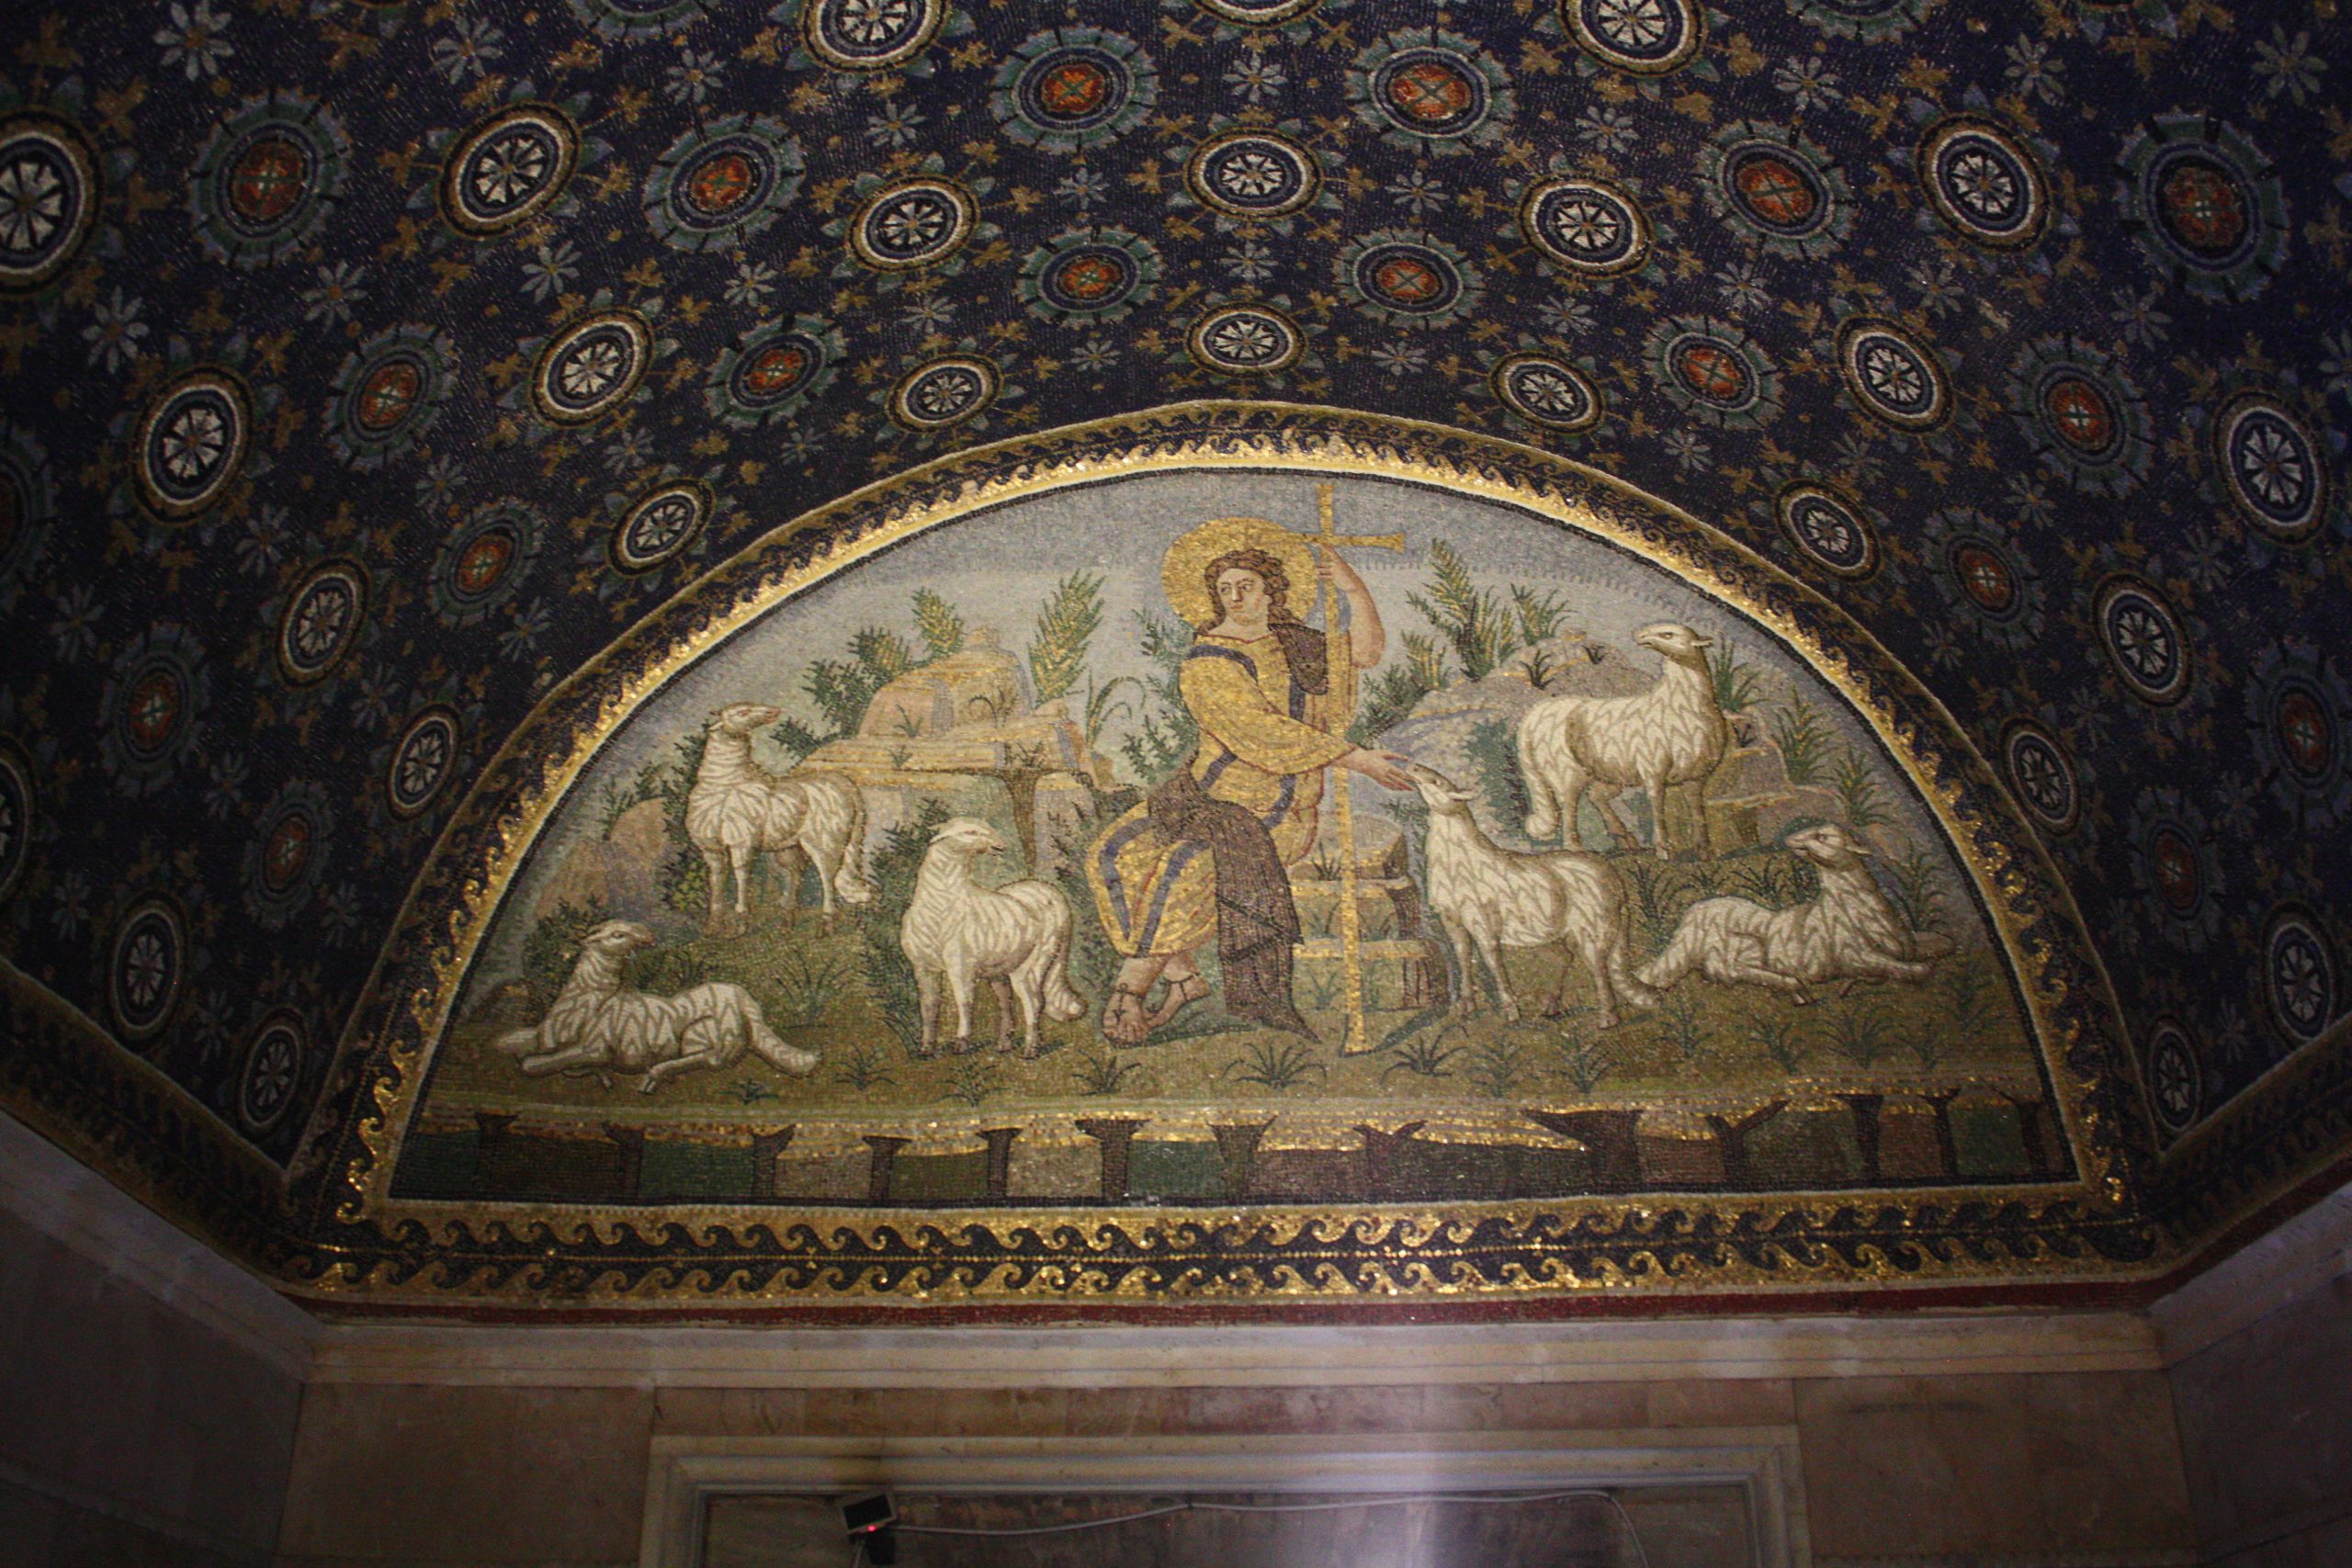 The Good Shepherd, Mausoleum of Galla Placidia, ca. fifth century (Ravenna, Italy). Photo: Asa Mittman, CC BY-NC-SA 2.0.